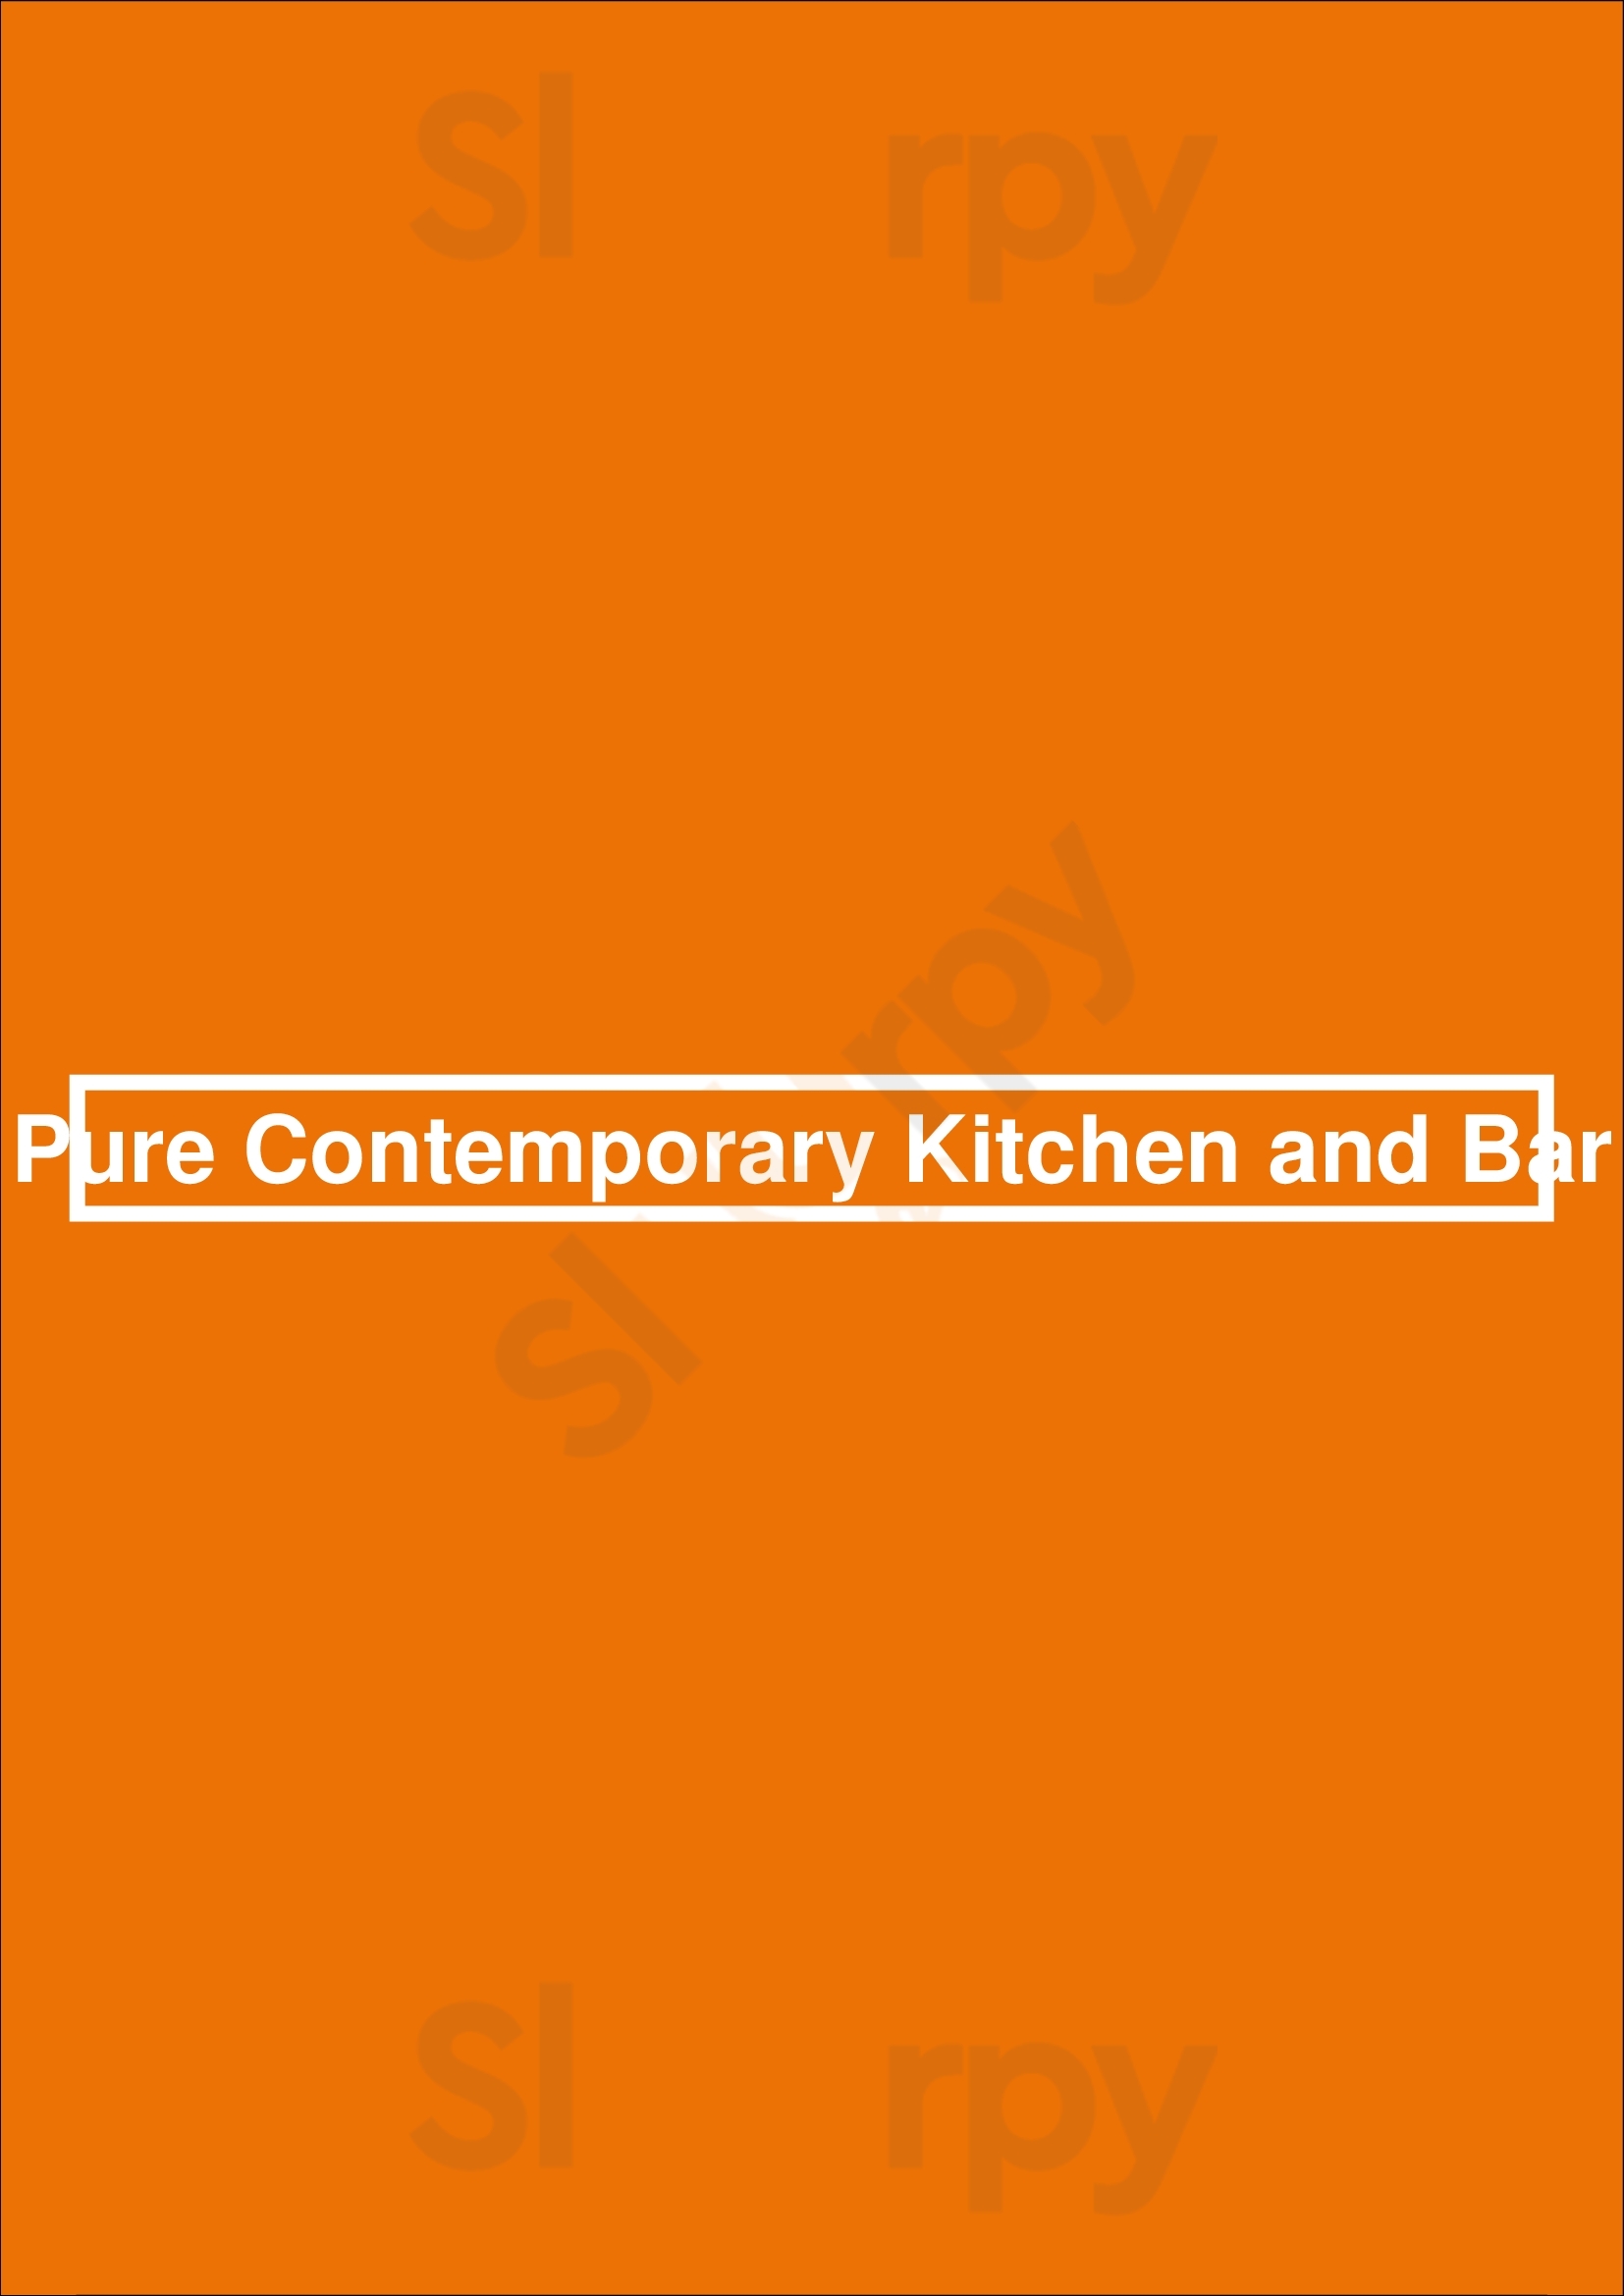 Pure Contemporary Kitchen And Bar Calgary Menu - 1